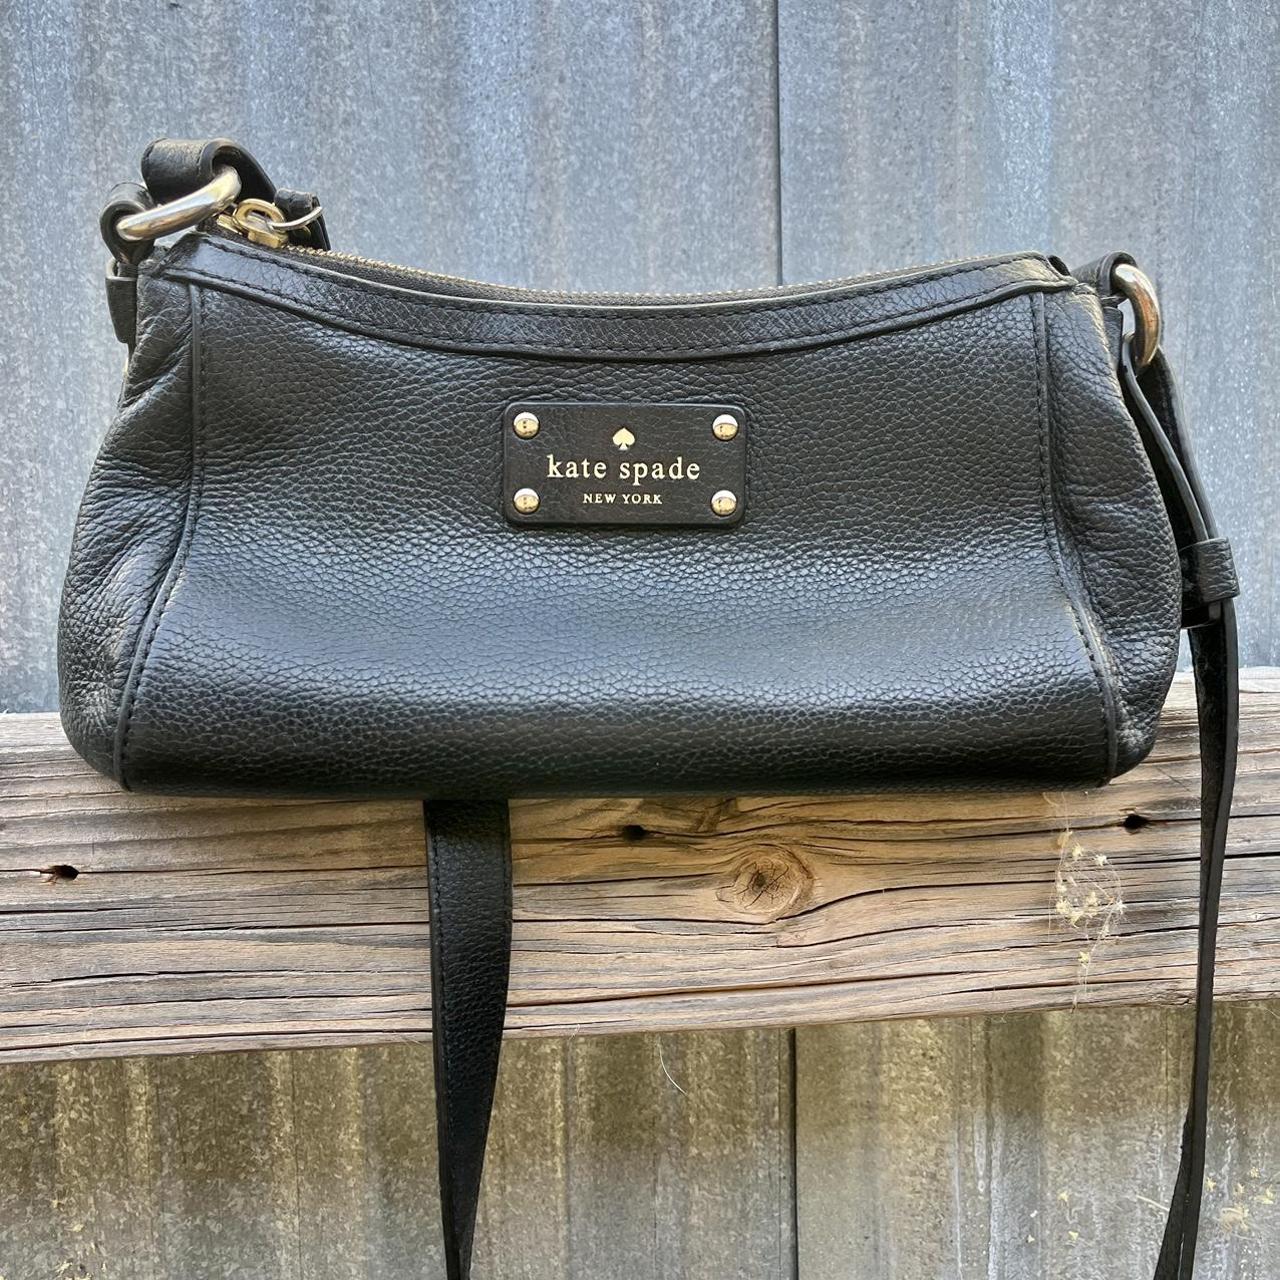 Kate Spade New York Women's Crossbody Bags - Black